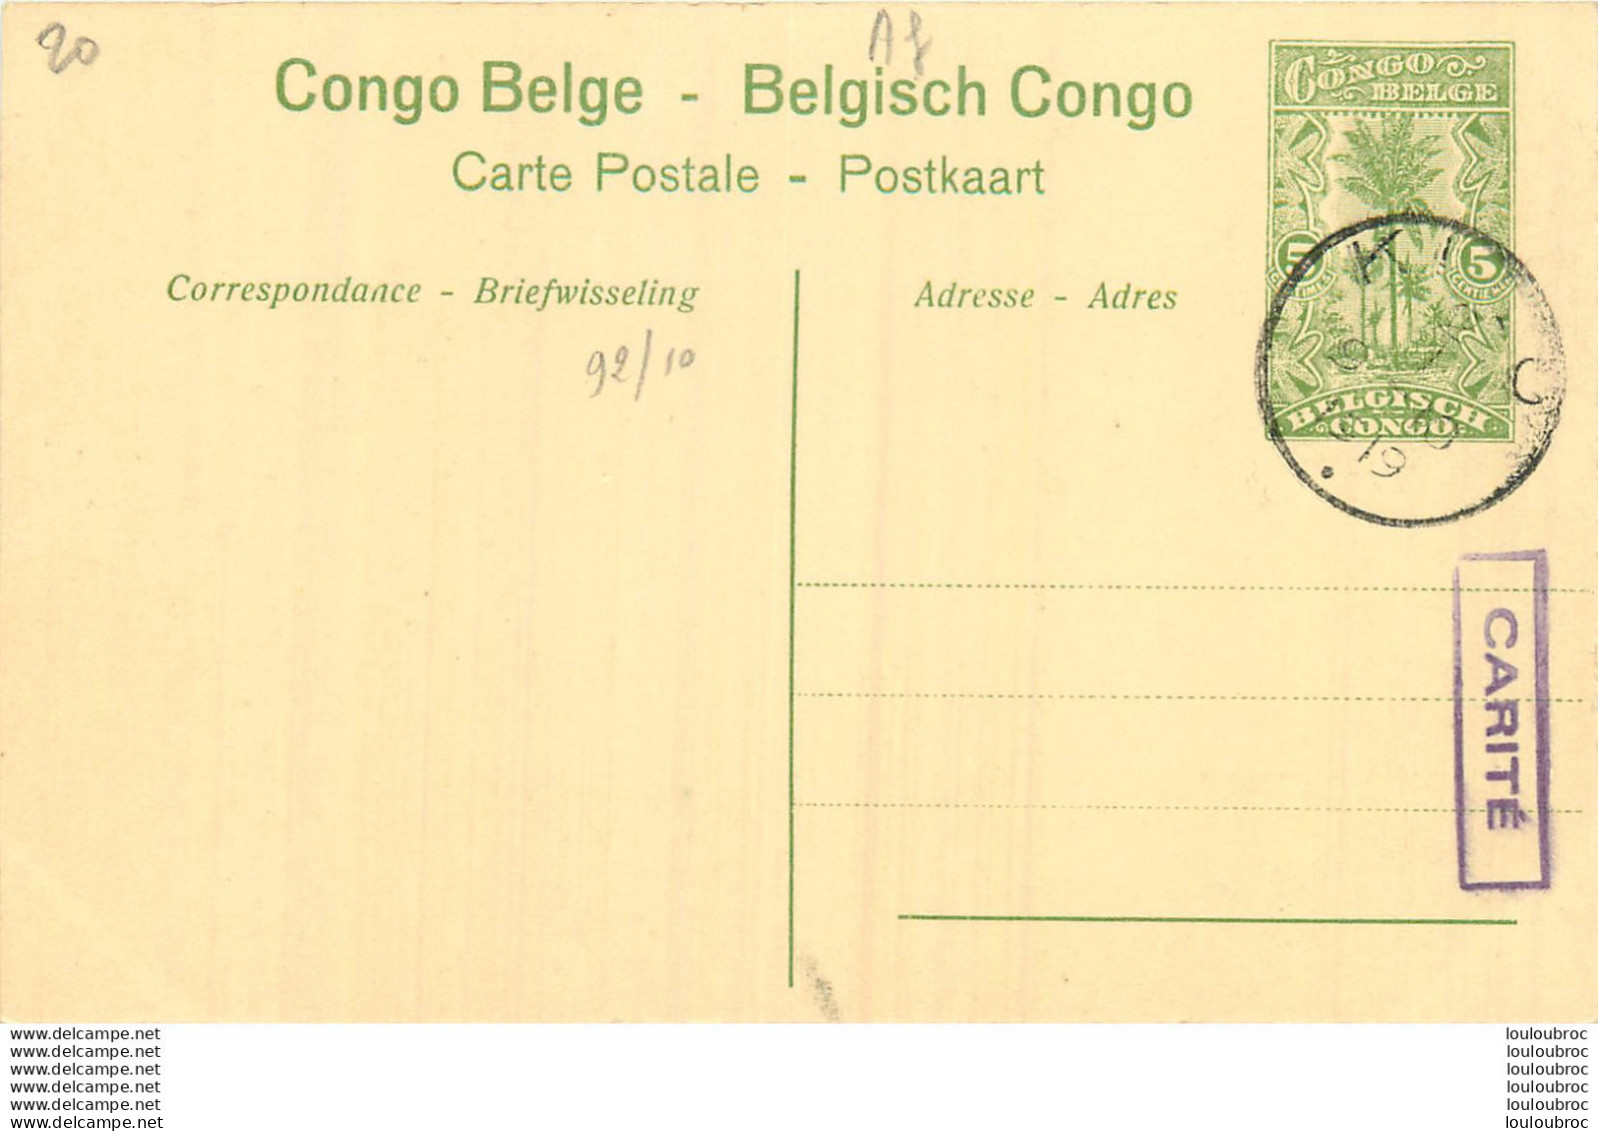 CONGO BELGE TYPES BANGALA AVEC SCARIFICATIONS - Congo Belge